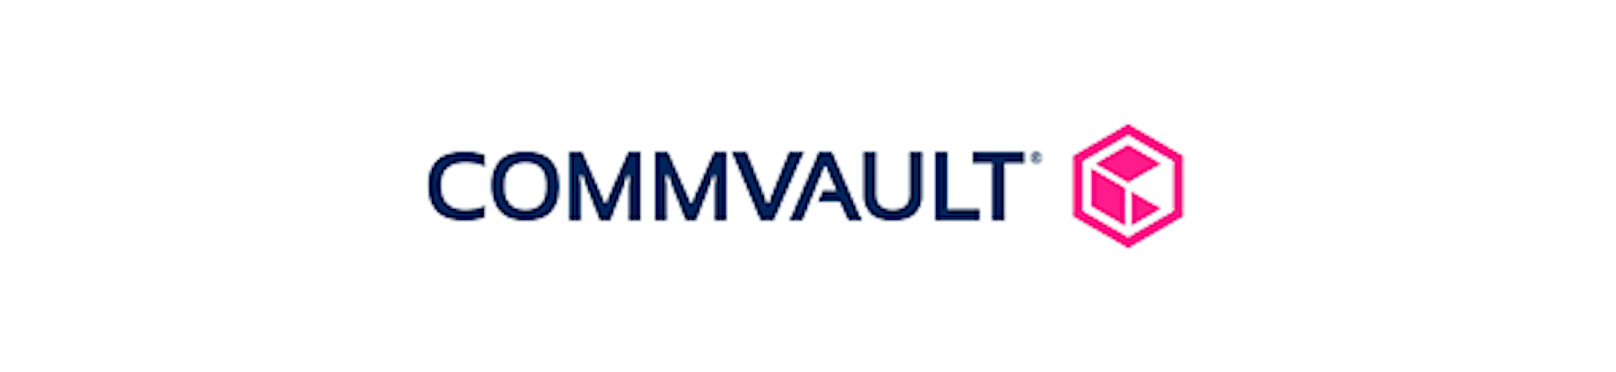 Commvault verkündet globale Partnerschaft mit SoftwareONE.